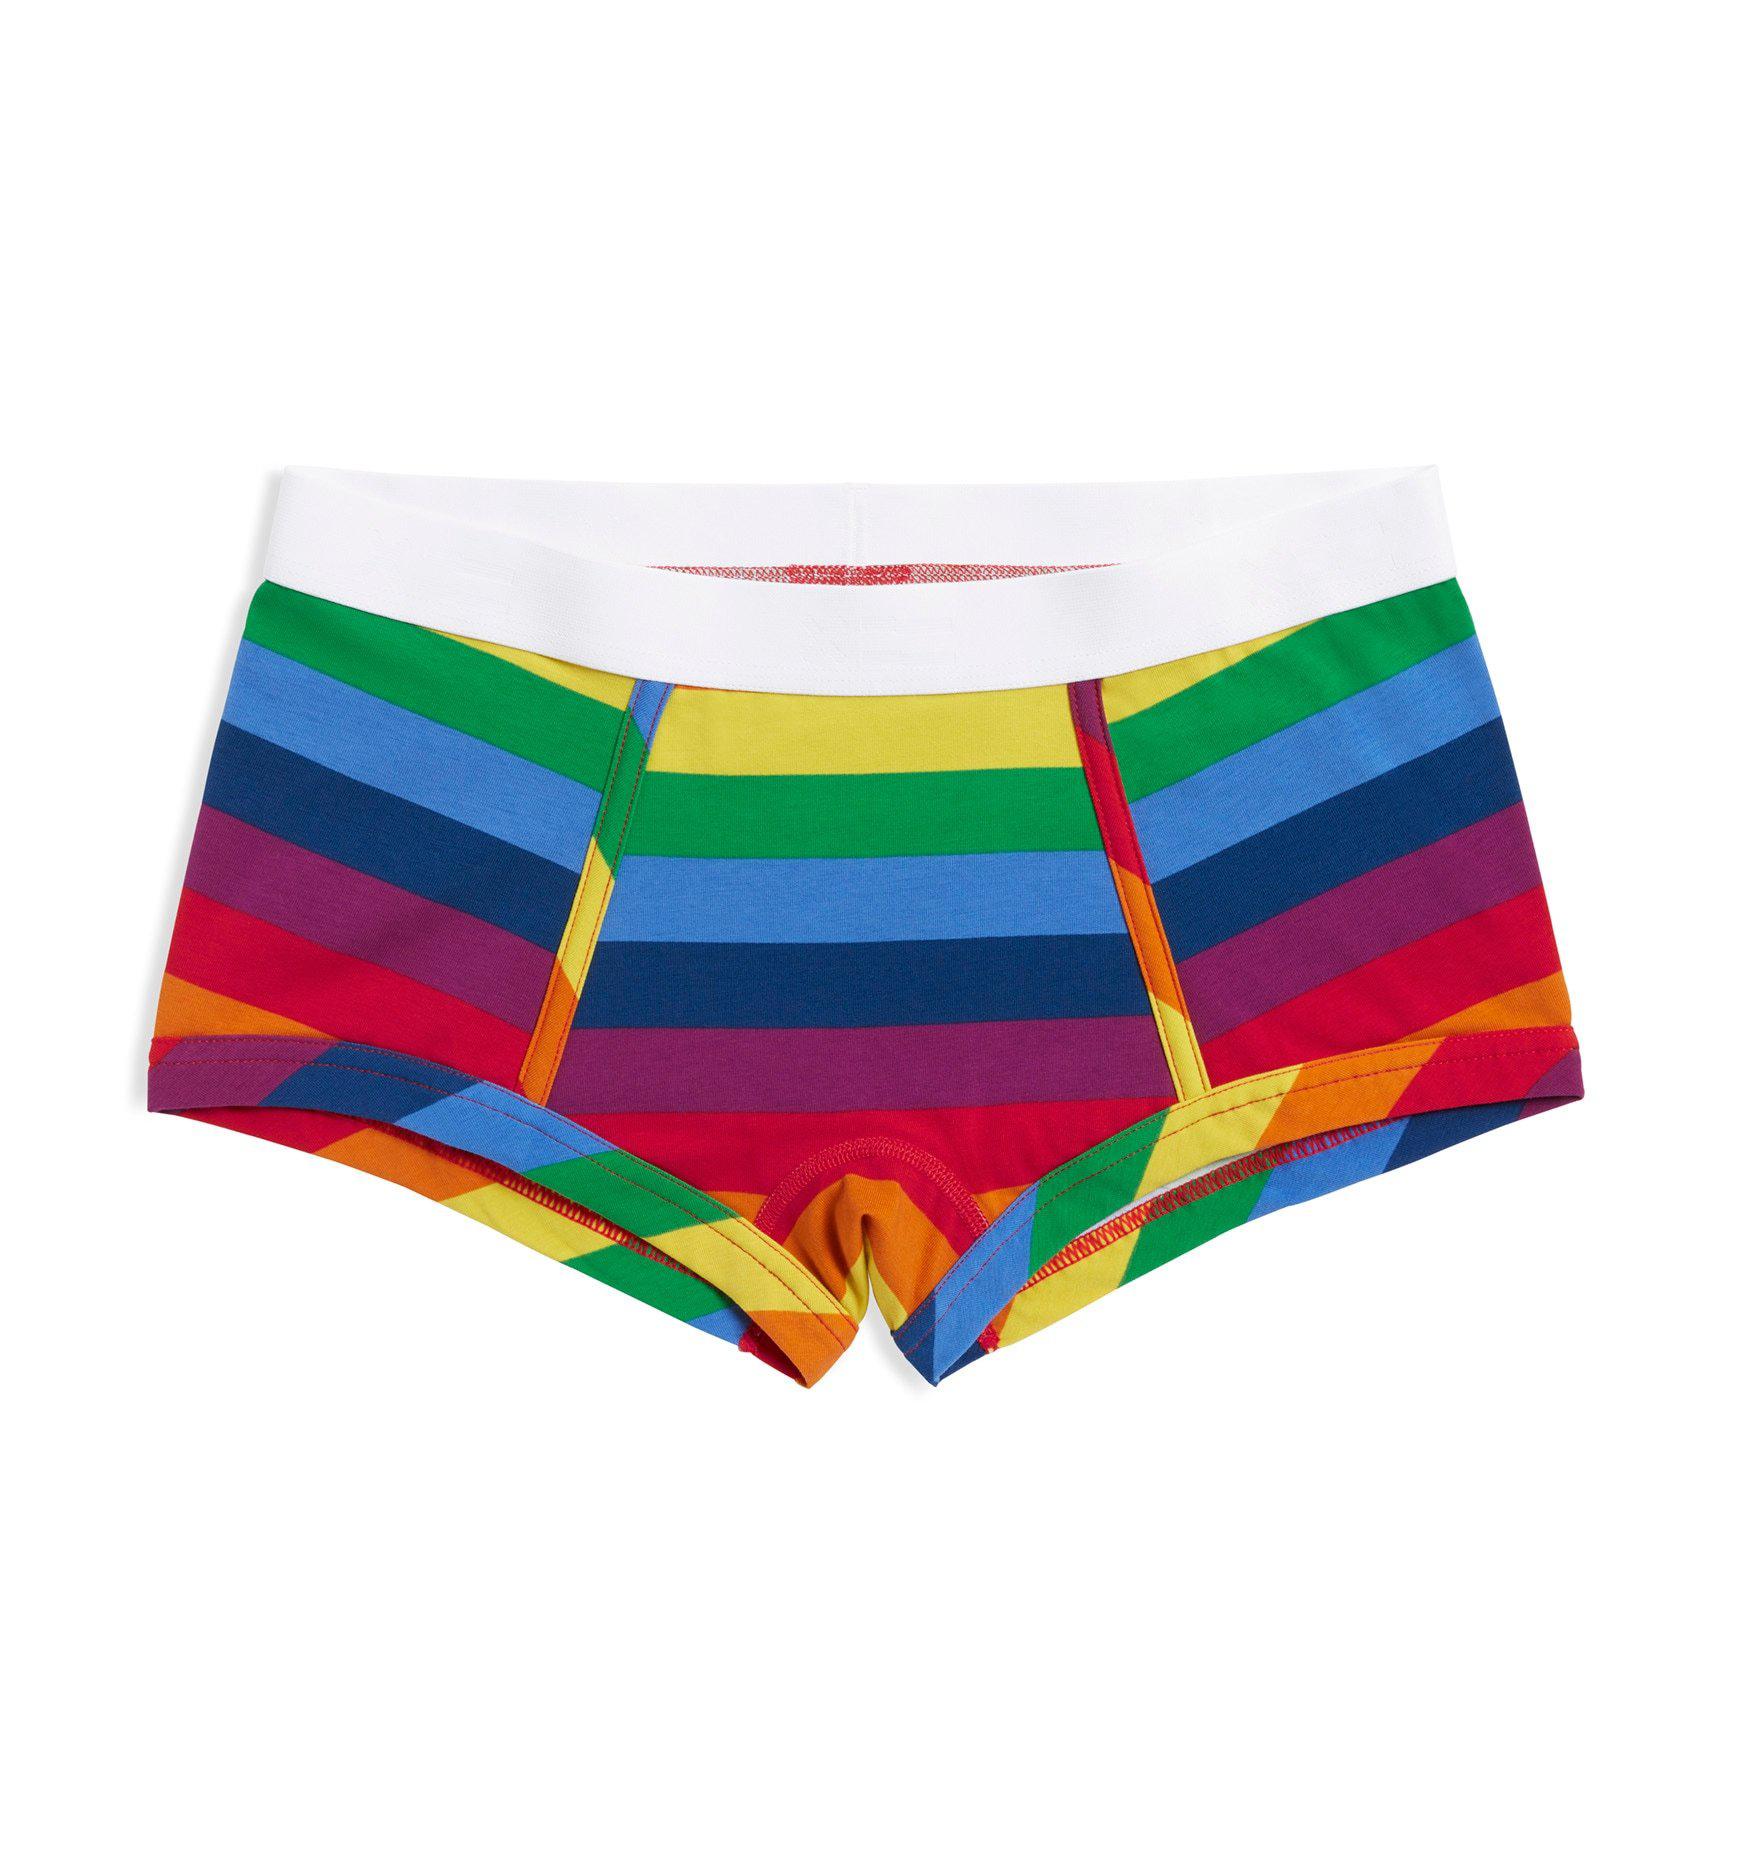 Boy Shorts Underwear Panties for Women Rainbow Cat Meow